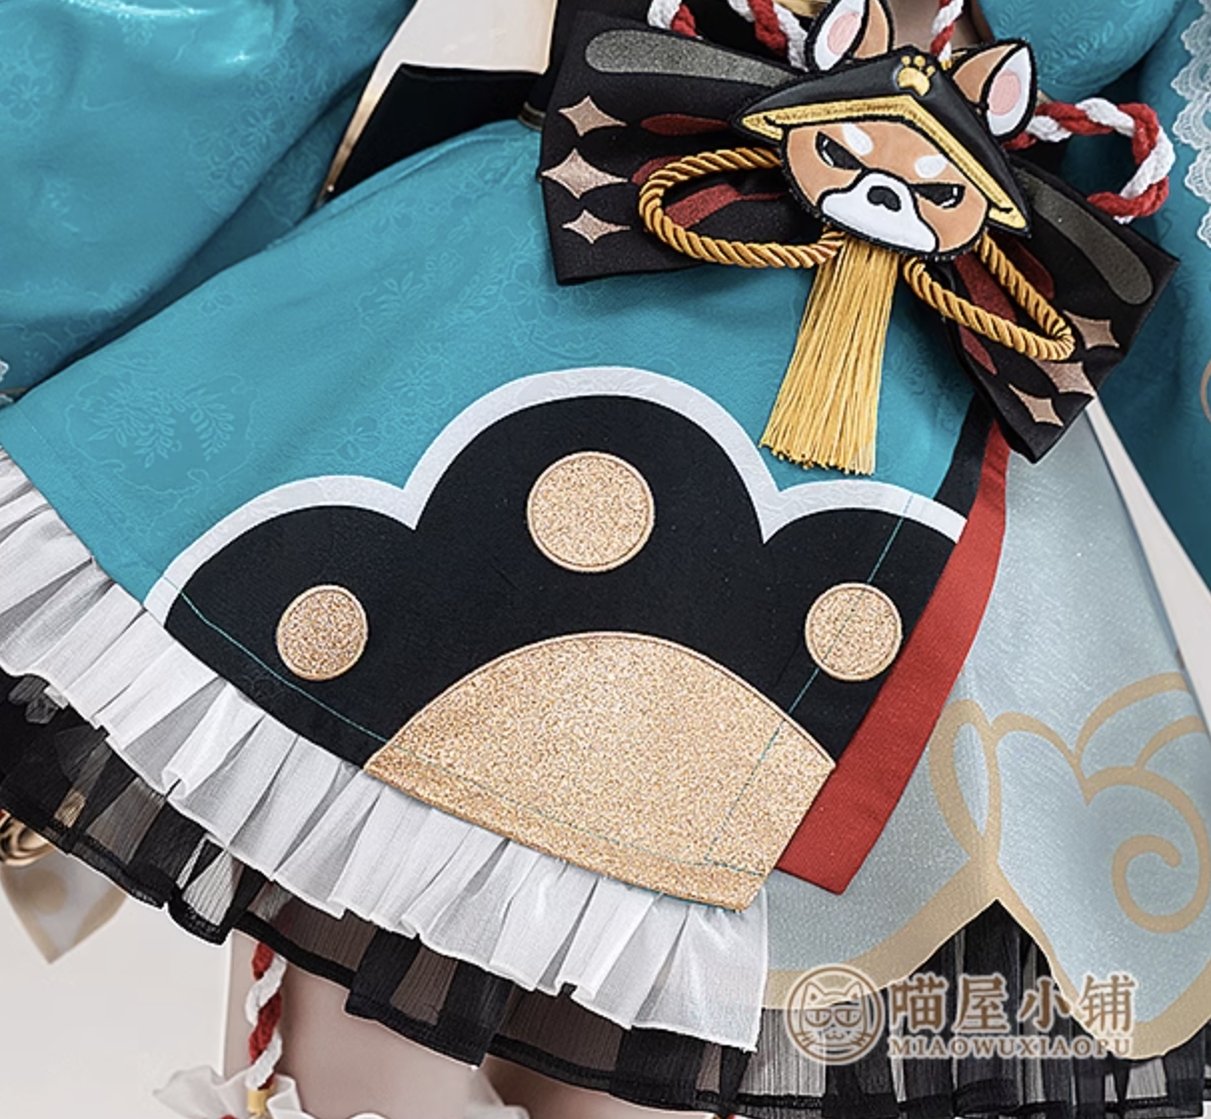 Genshin Impact Gorou Cosplay Costume Anime Suit - COS-CO-18501 - MIAOWU COSPLAY - 42shops